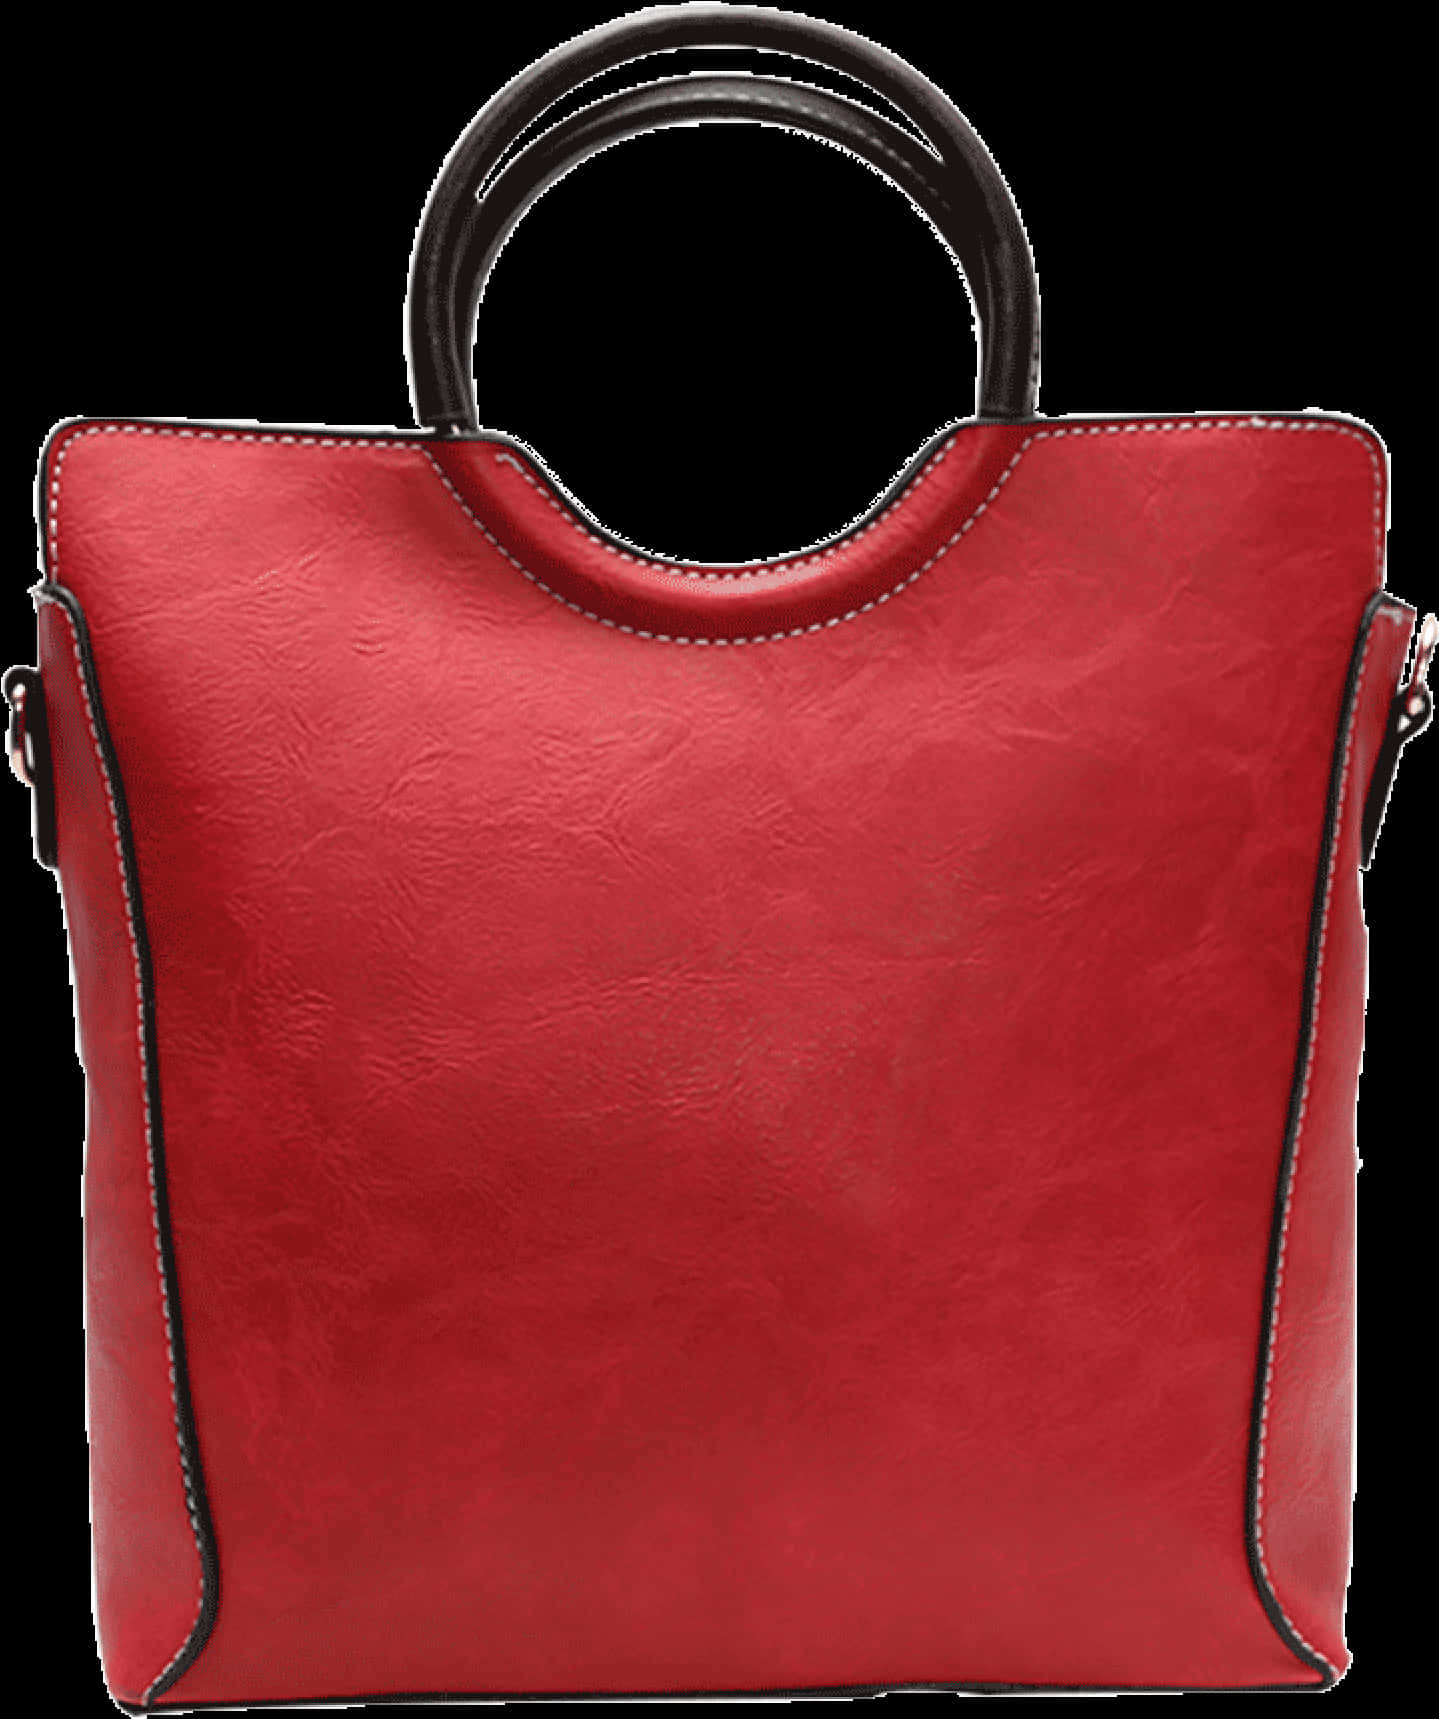 Elegant Red Leather Tote Bag PNG image